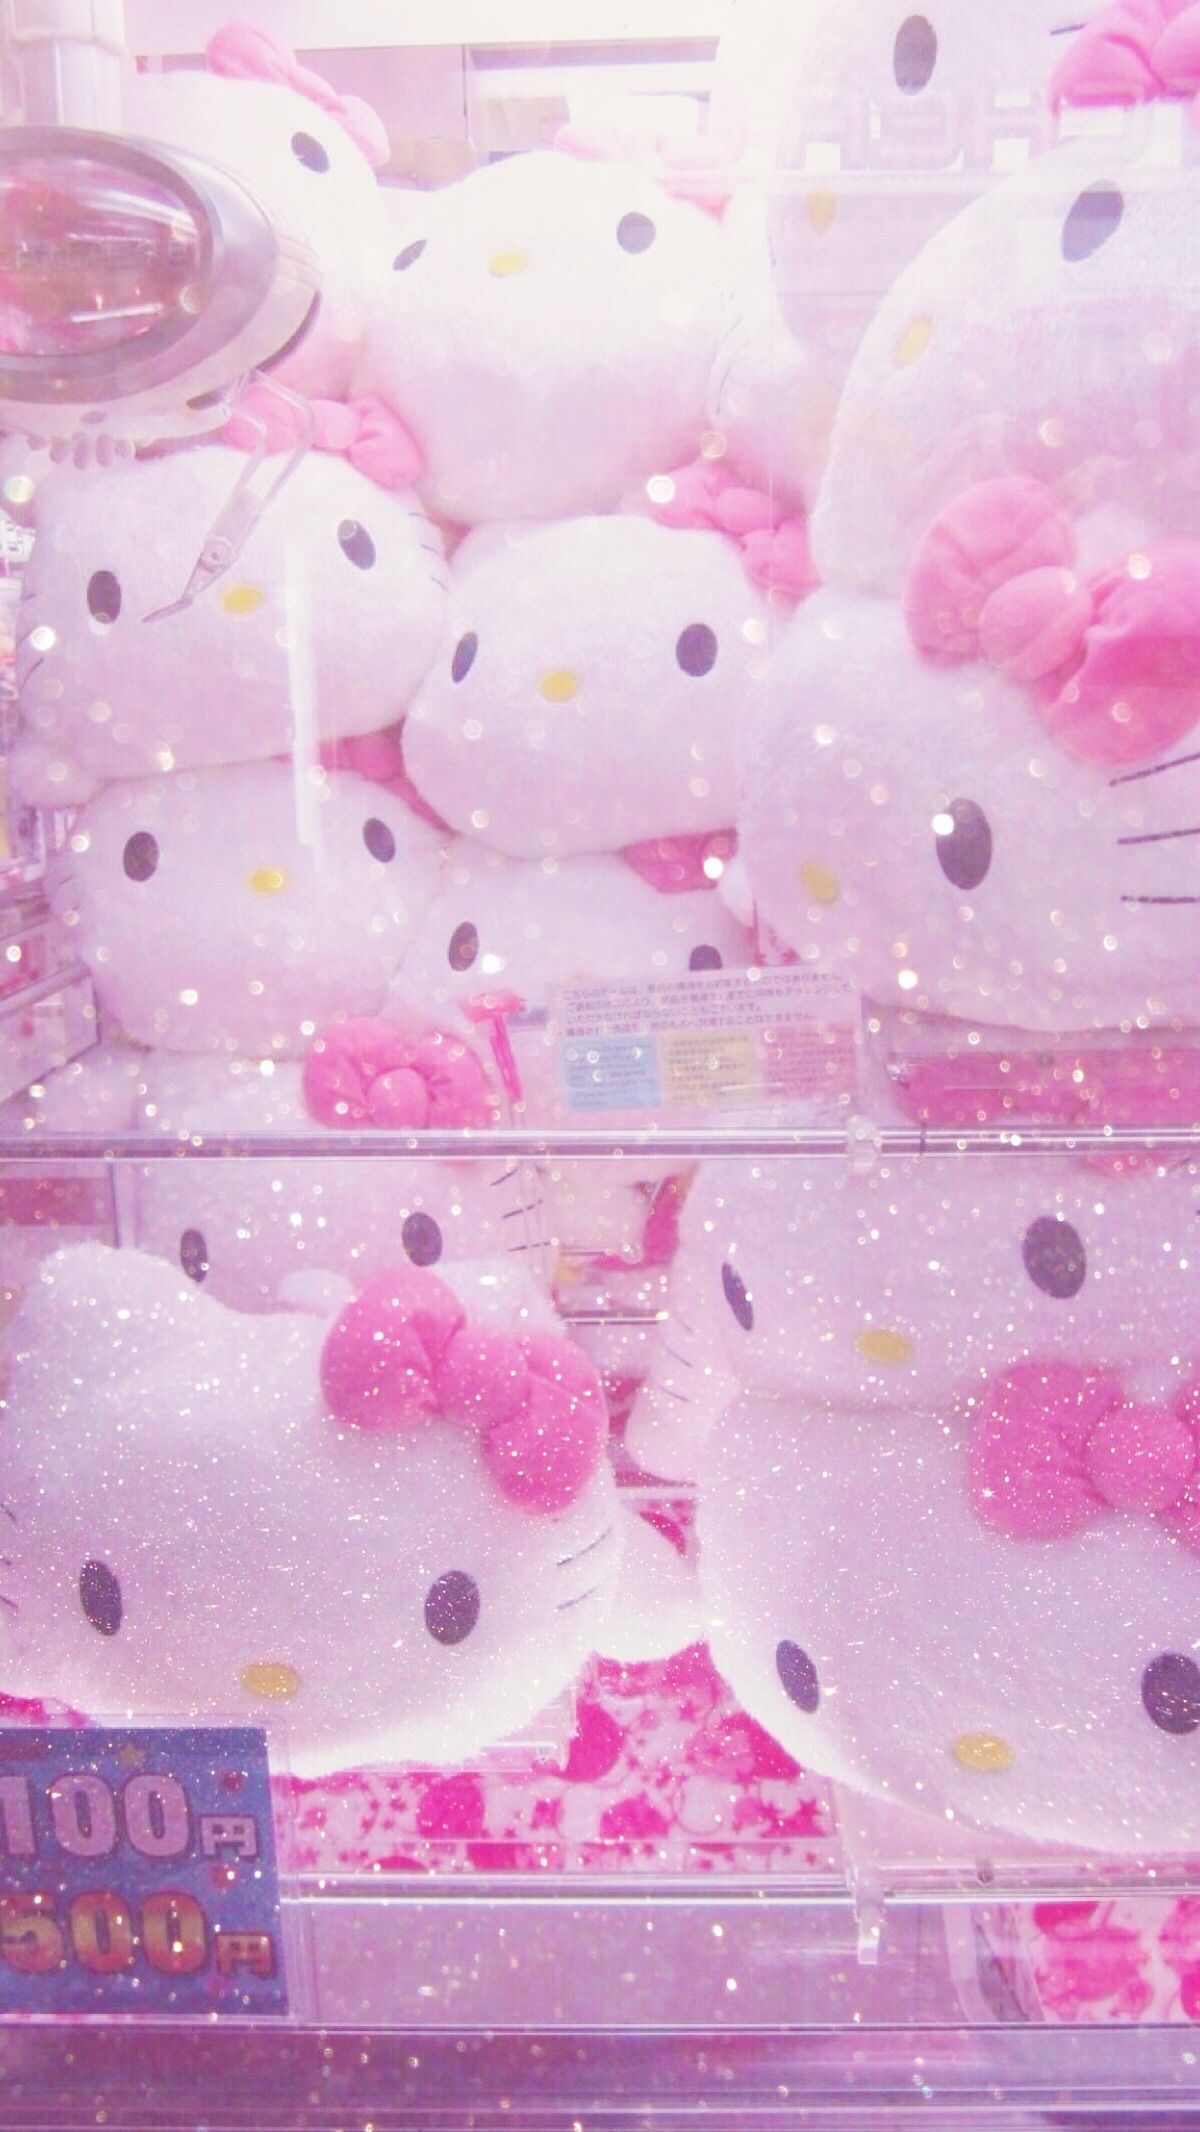 A hello kitty stuffed animal in the store - Hello Kitty, Sanrio